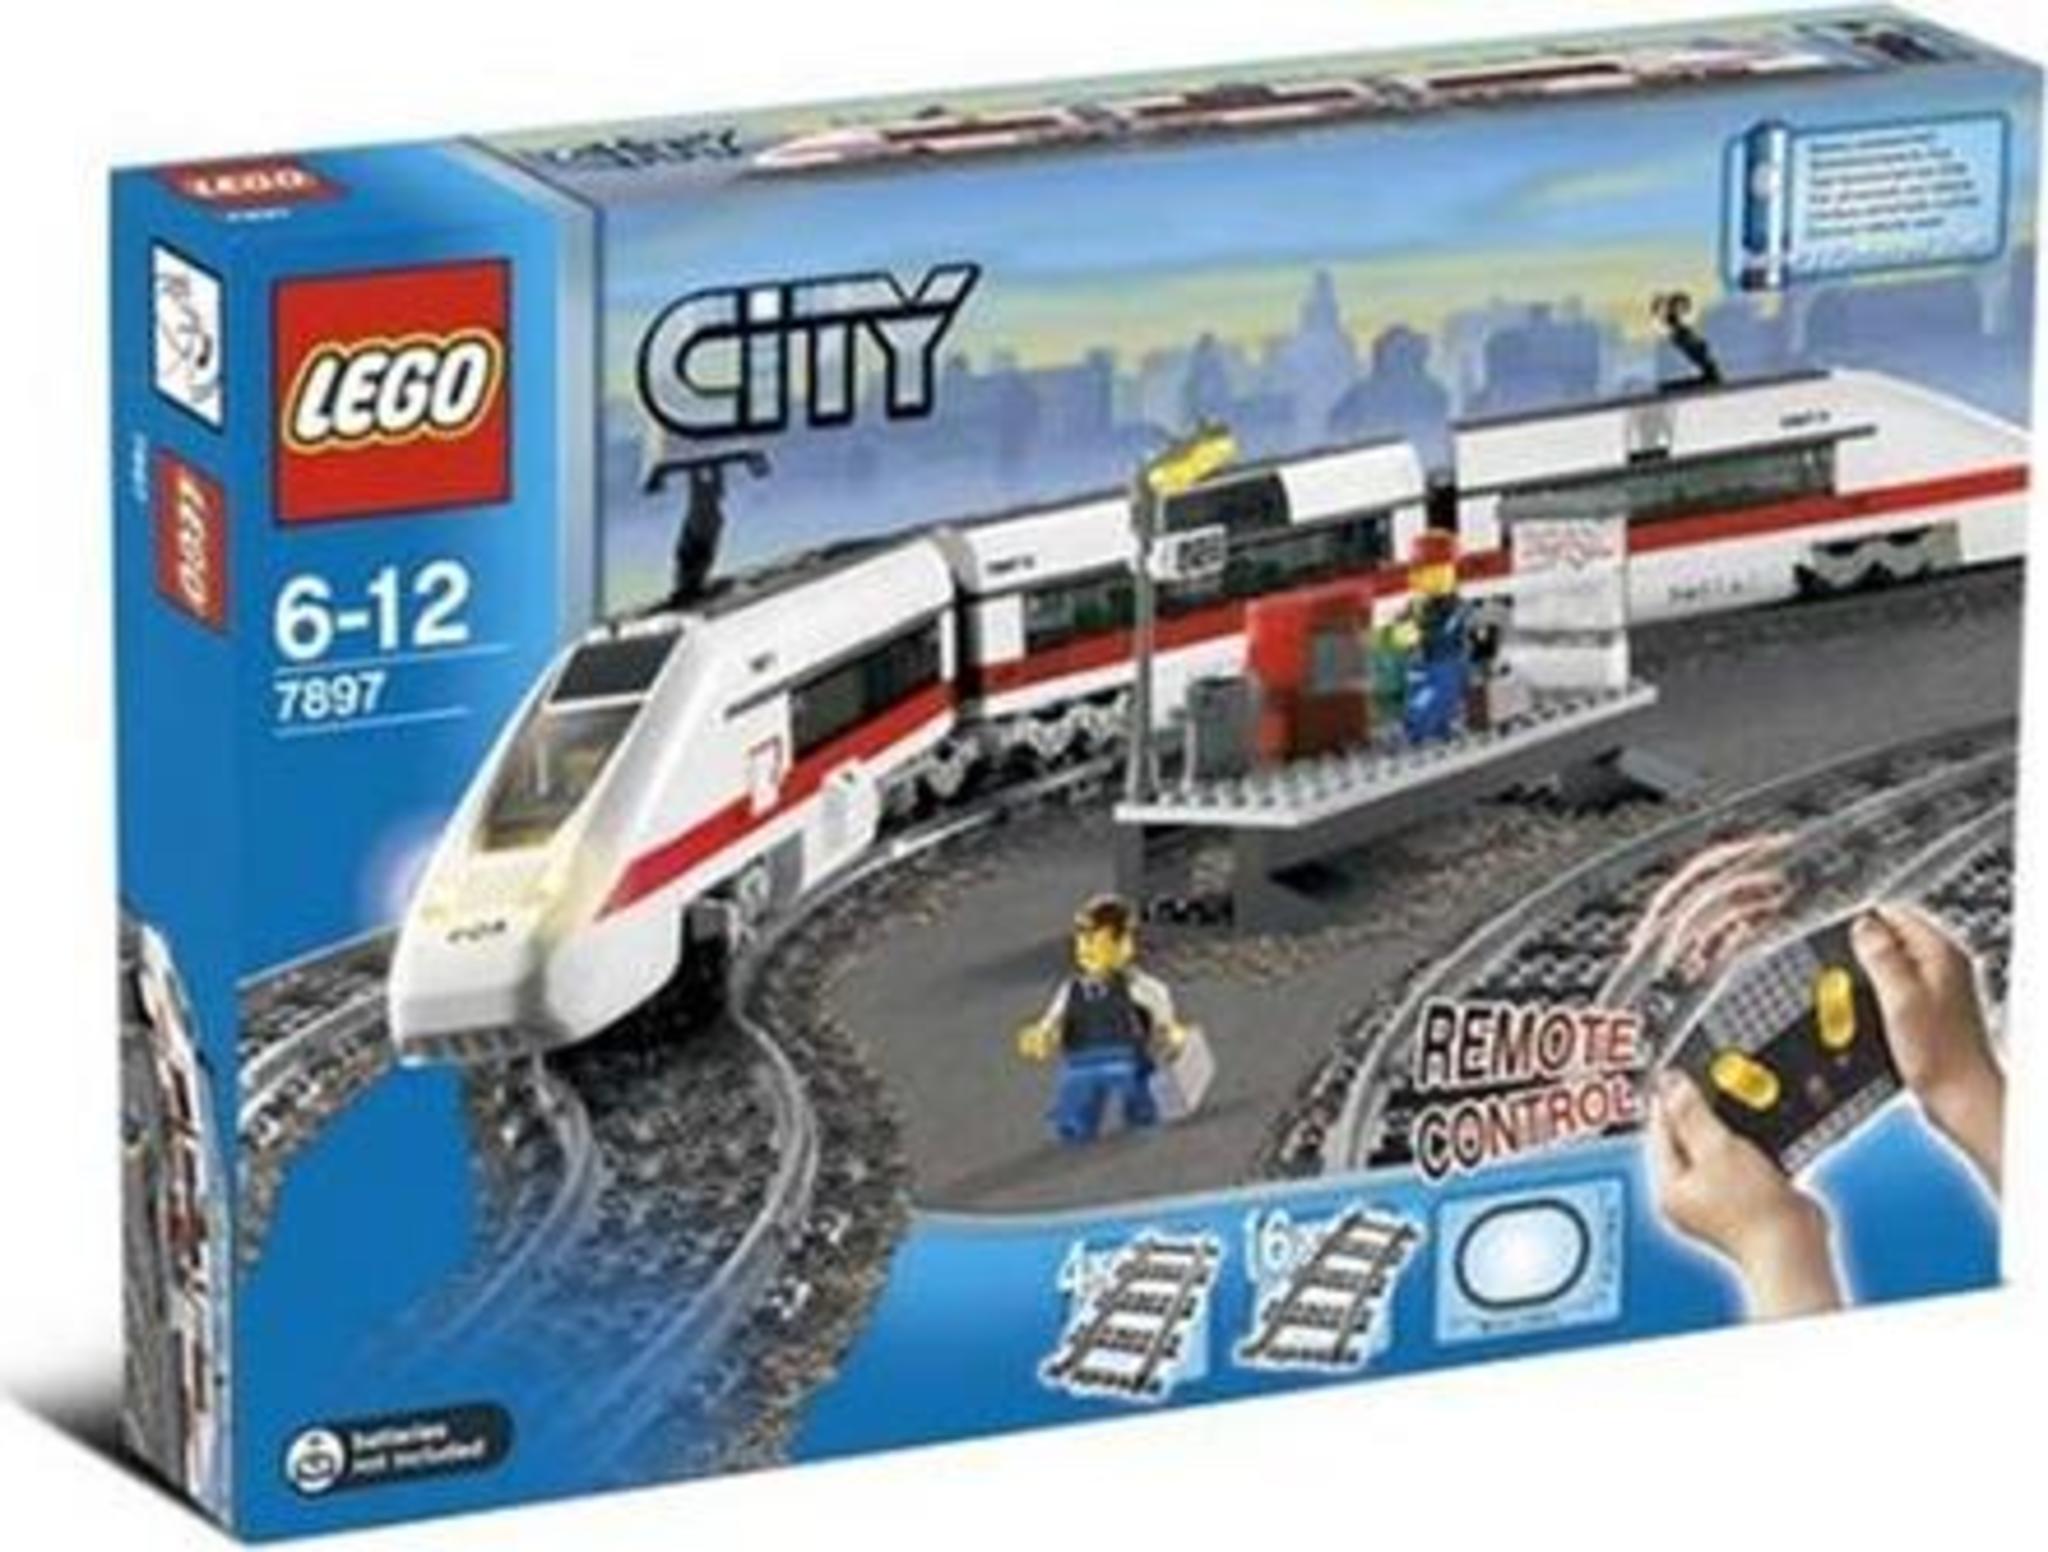 LEGO City 7897 - Passenger Train